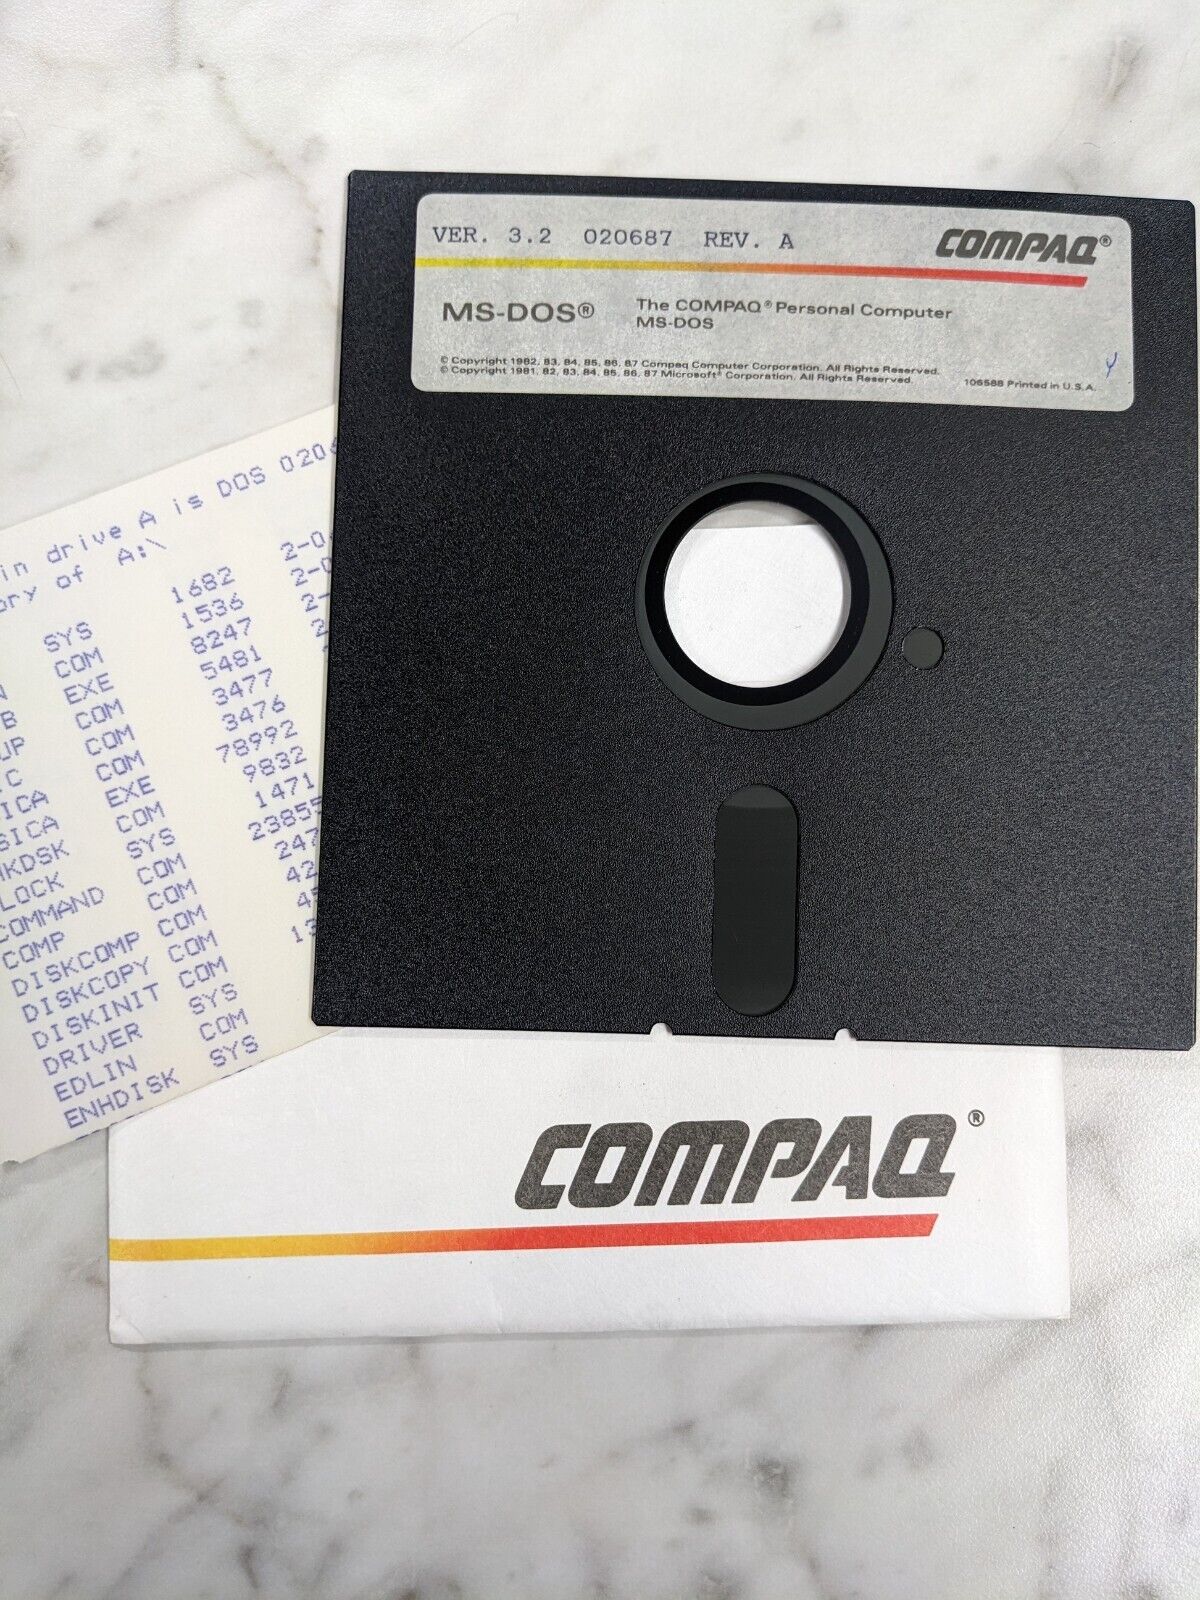 Compaq MS-DOS 020687 REV A PERSONAL COMPUTER SOFTWARE 1987 VINTAGE PC IBM DISK